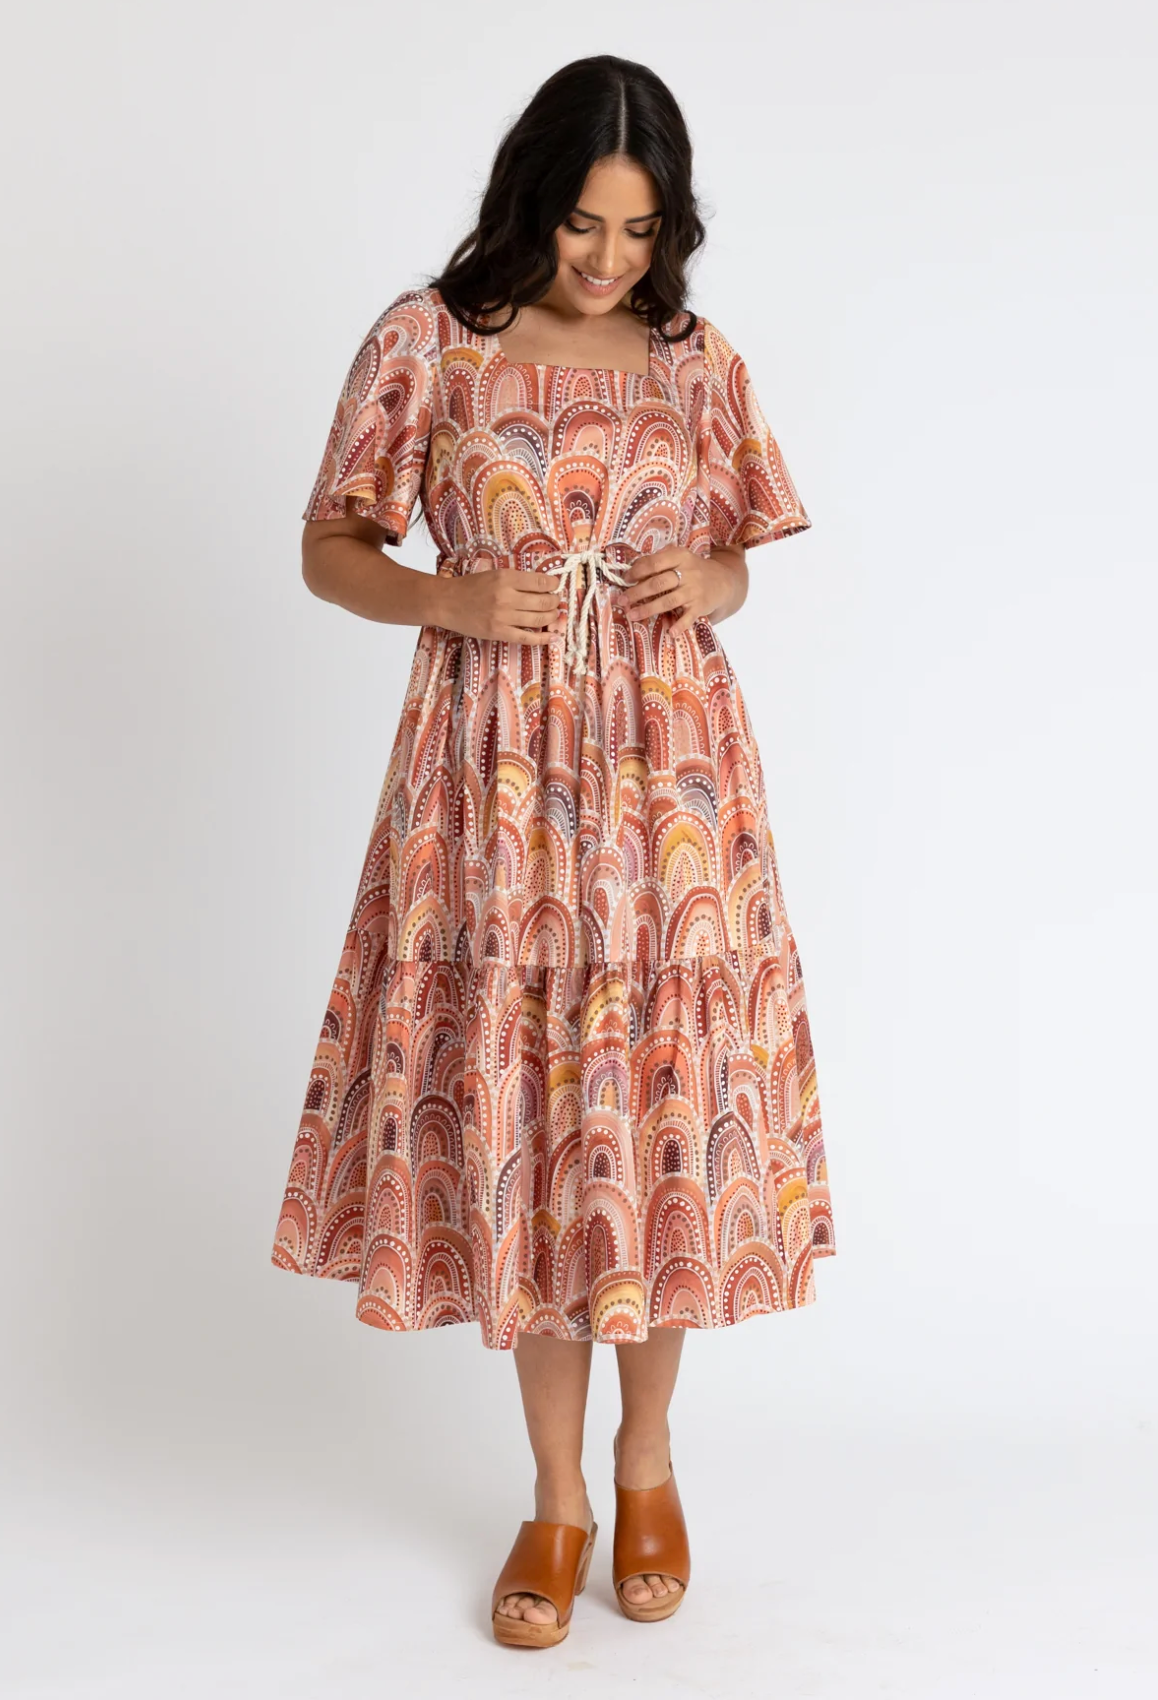 Protea dress and top - Paper pattern - MEGAN NIELSEN